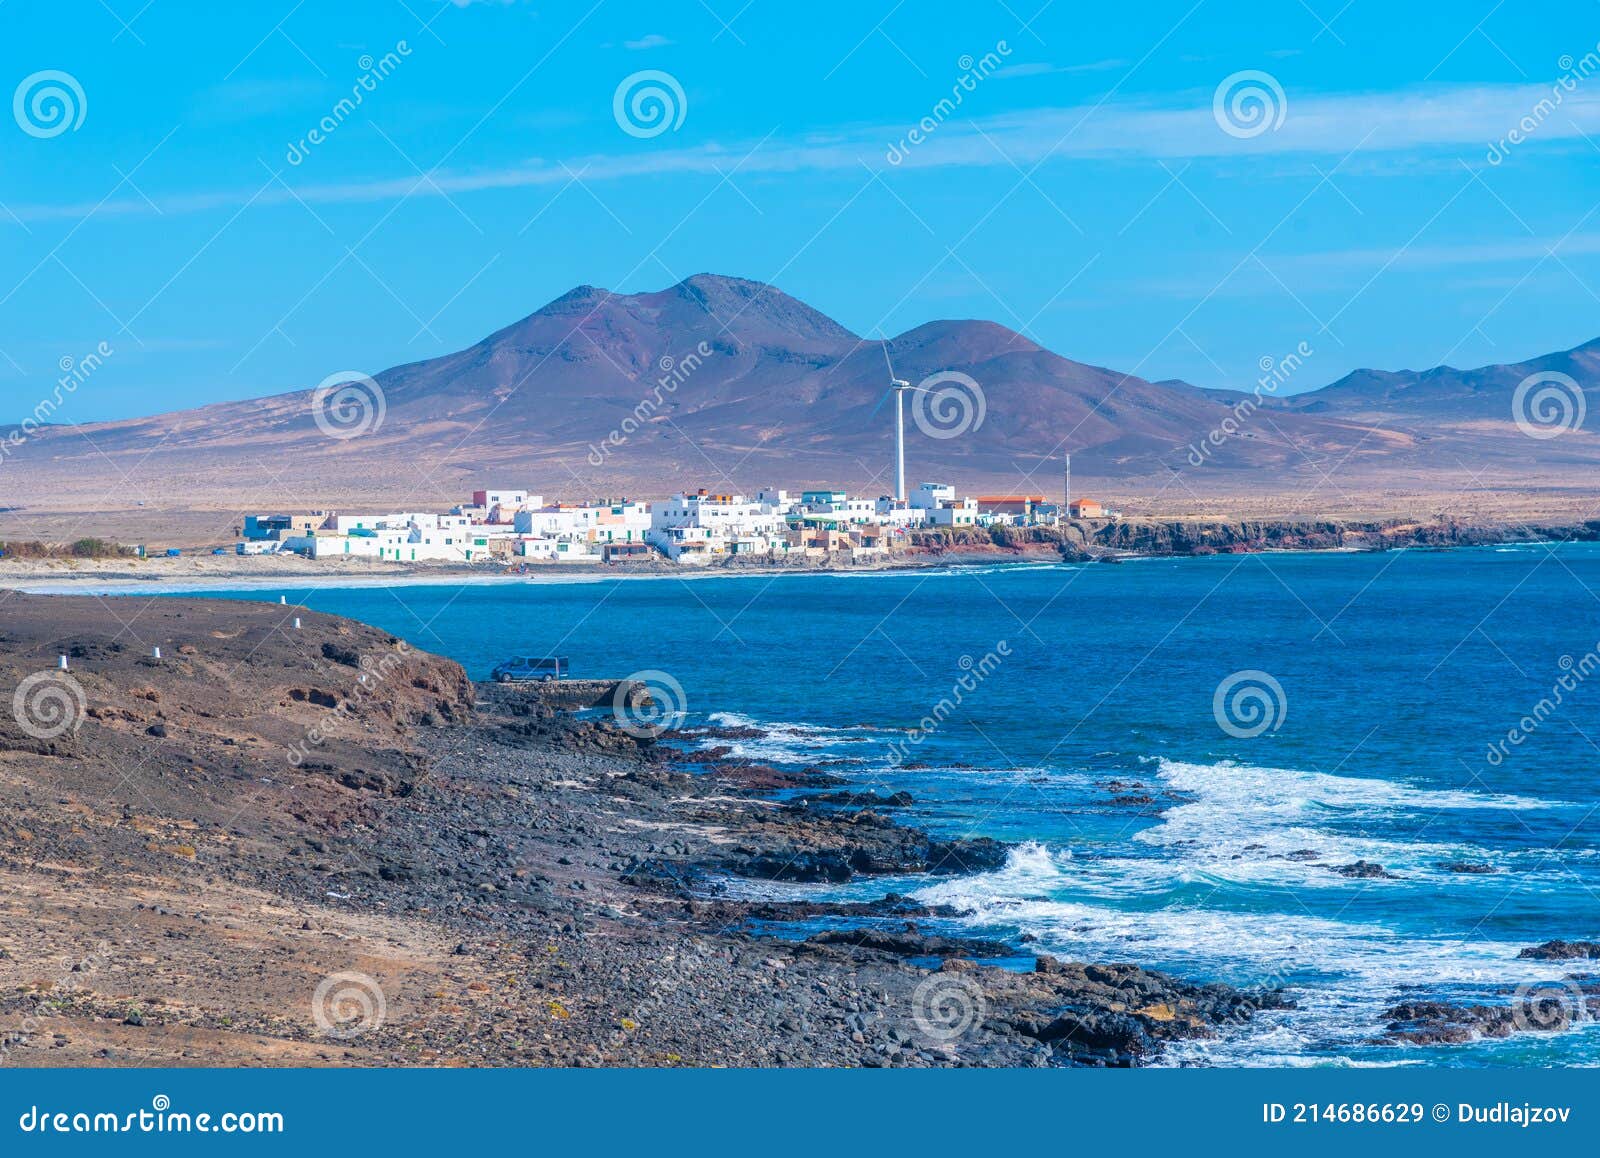 puerto de la cruz at jandia peninsula at fuerteventura, canary islands, spain